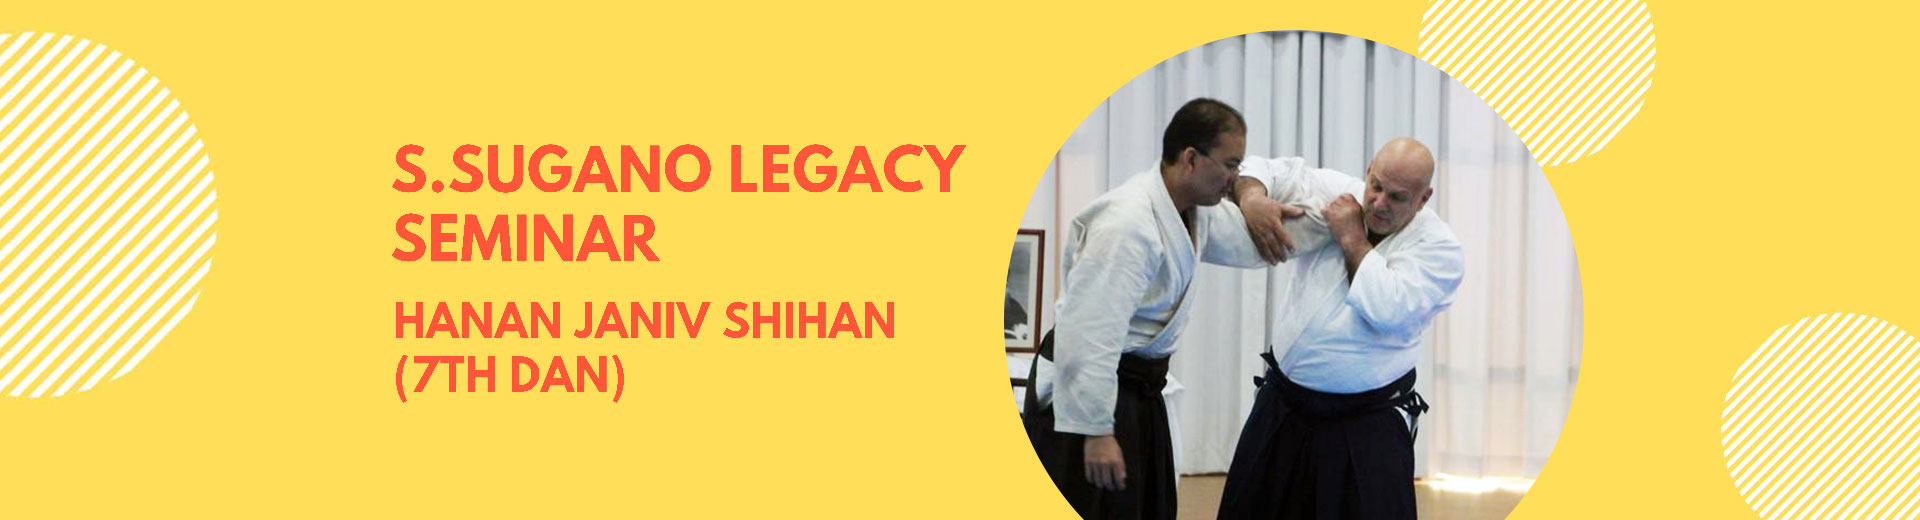 S. Sugano Legacy Seminar - Hanan Janiv Shihan Seminar